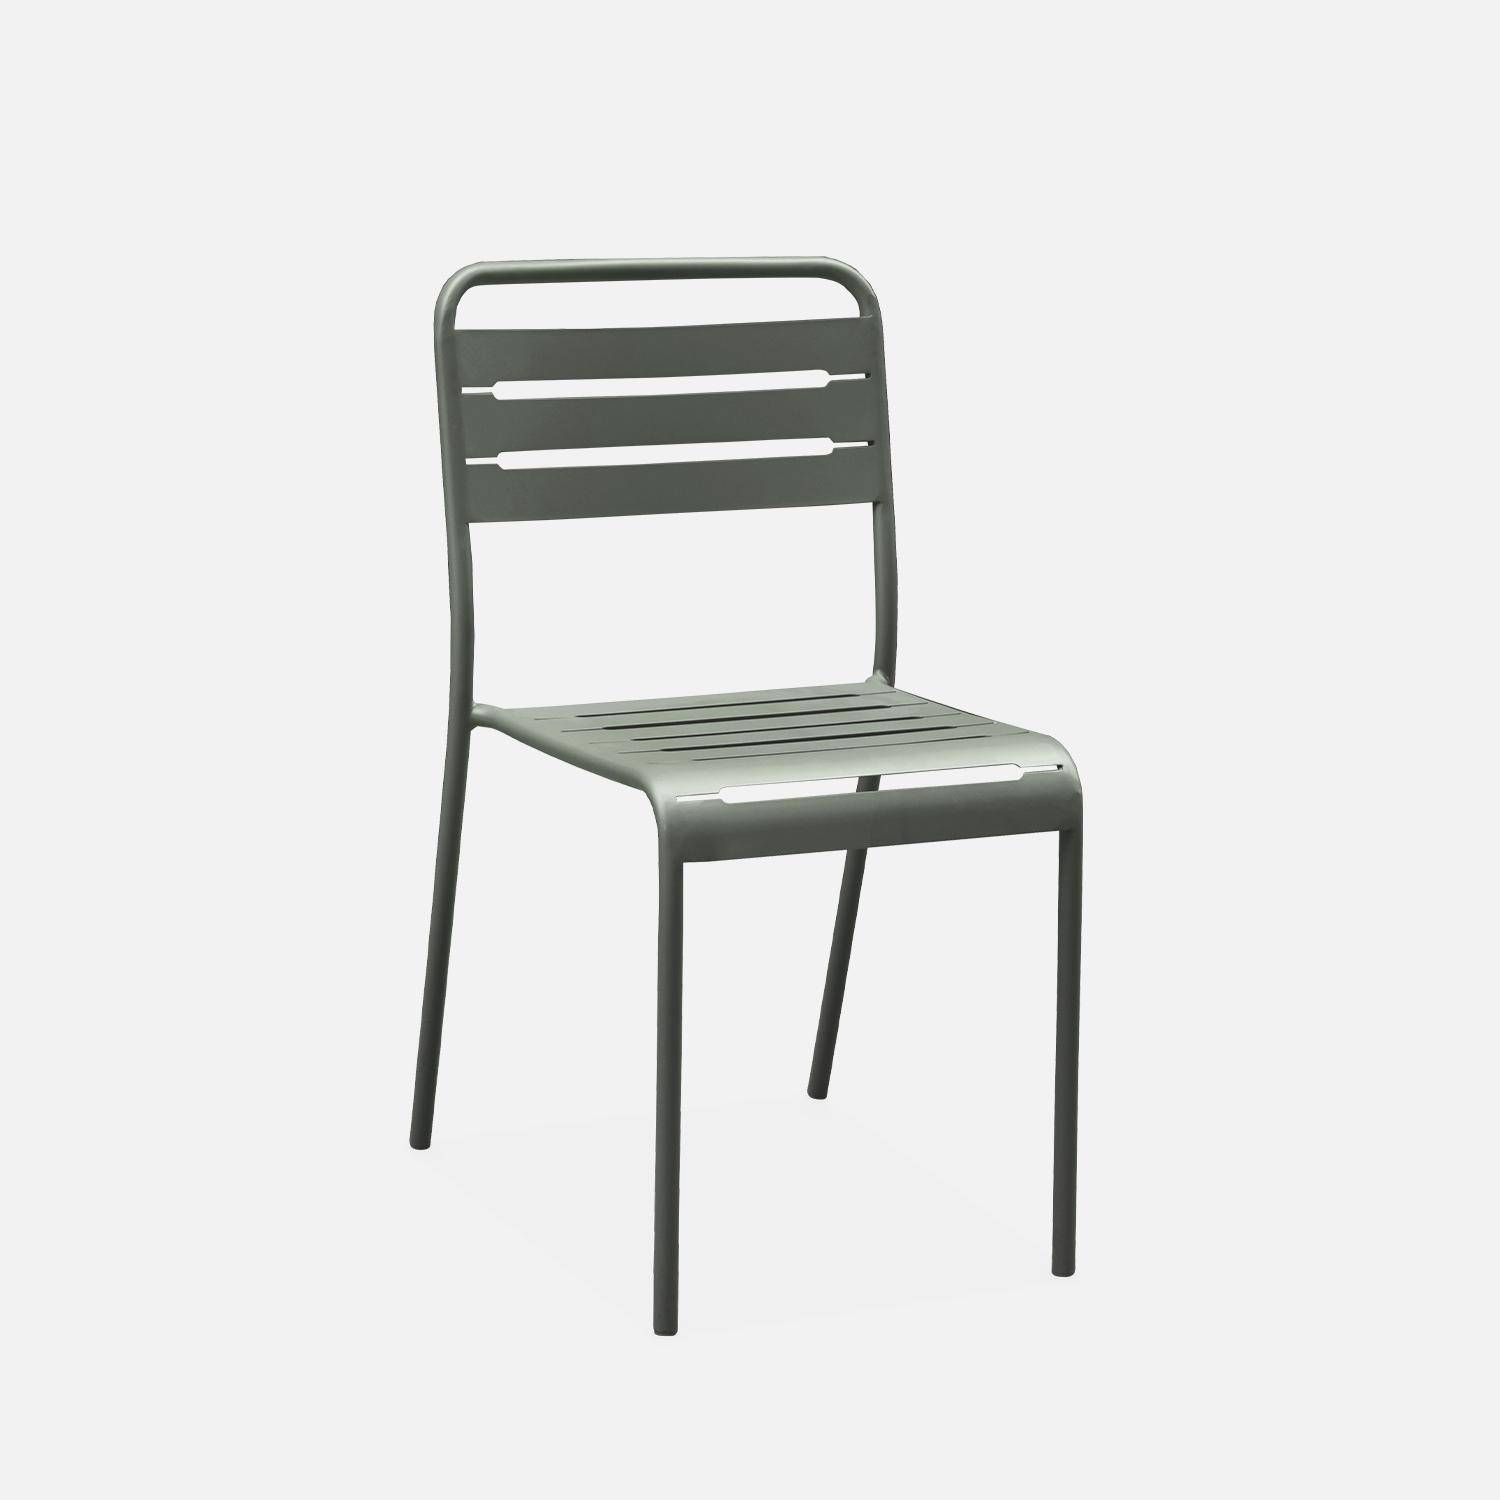 6-8 seater rectangular steel garden table set with chairs, 160cm, khaki green Photo6